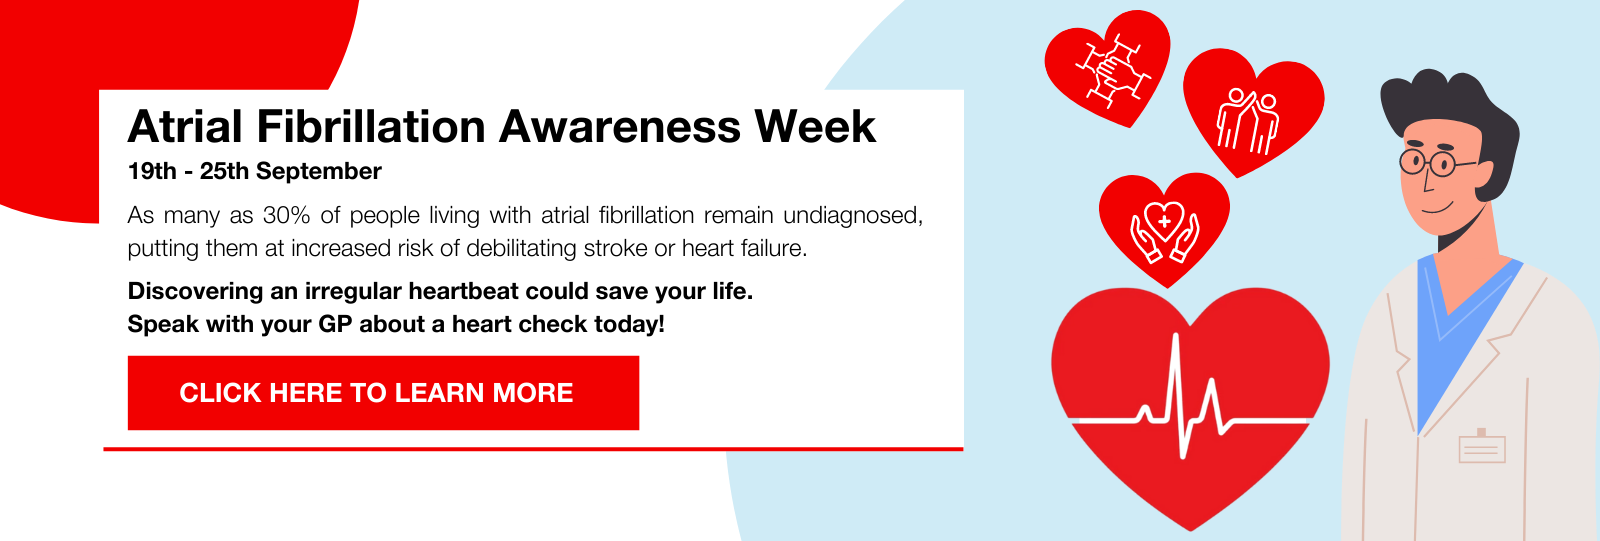 AF Awareness Week